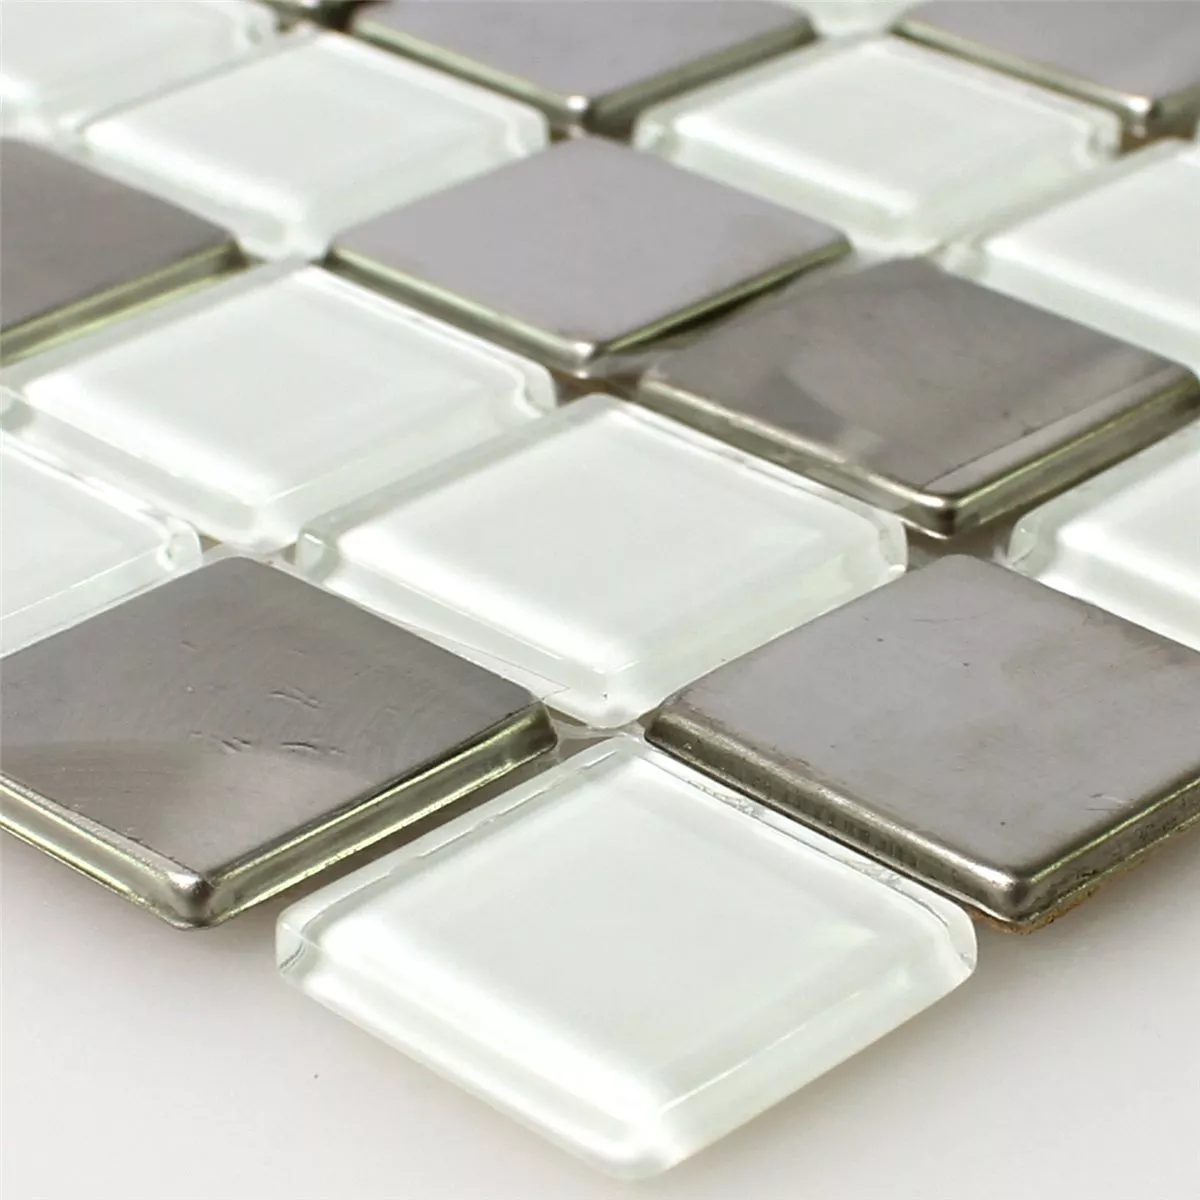 Azulejo Mosaico Aço Inoxidável Vidro Branco Prata Mix